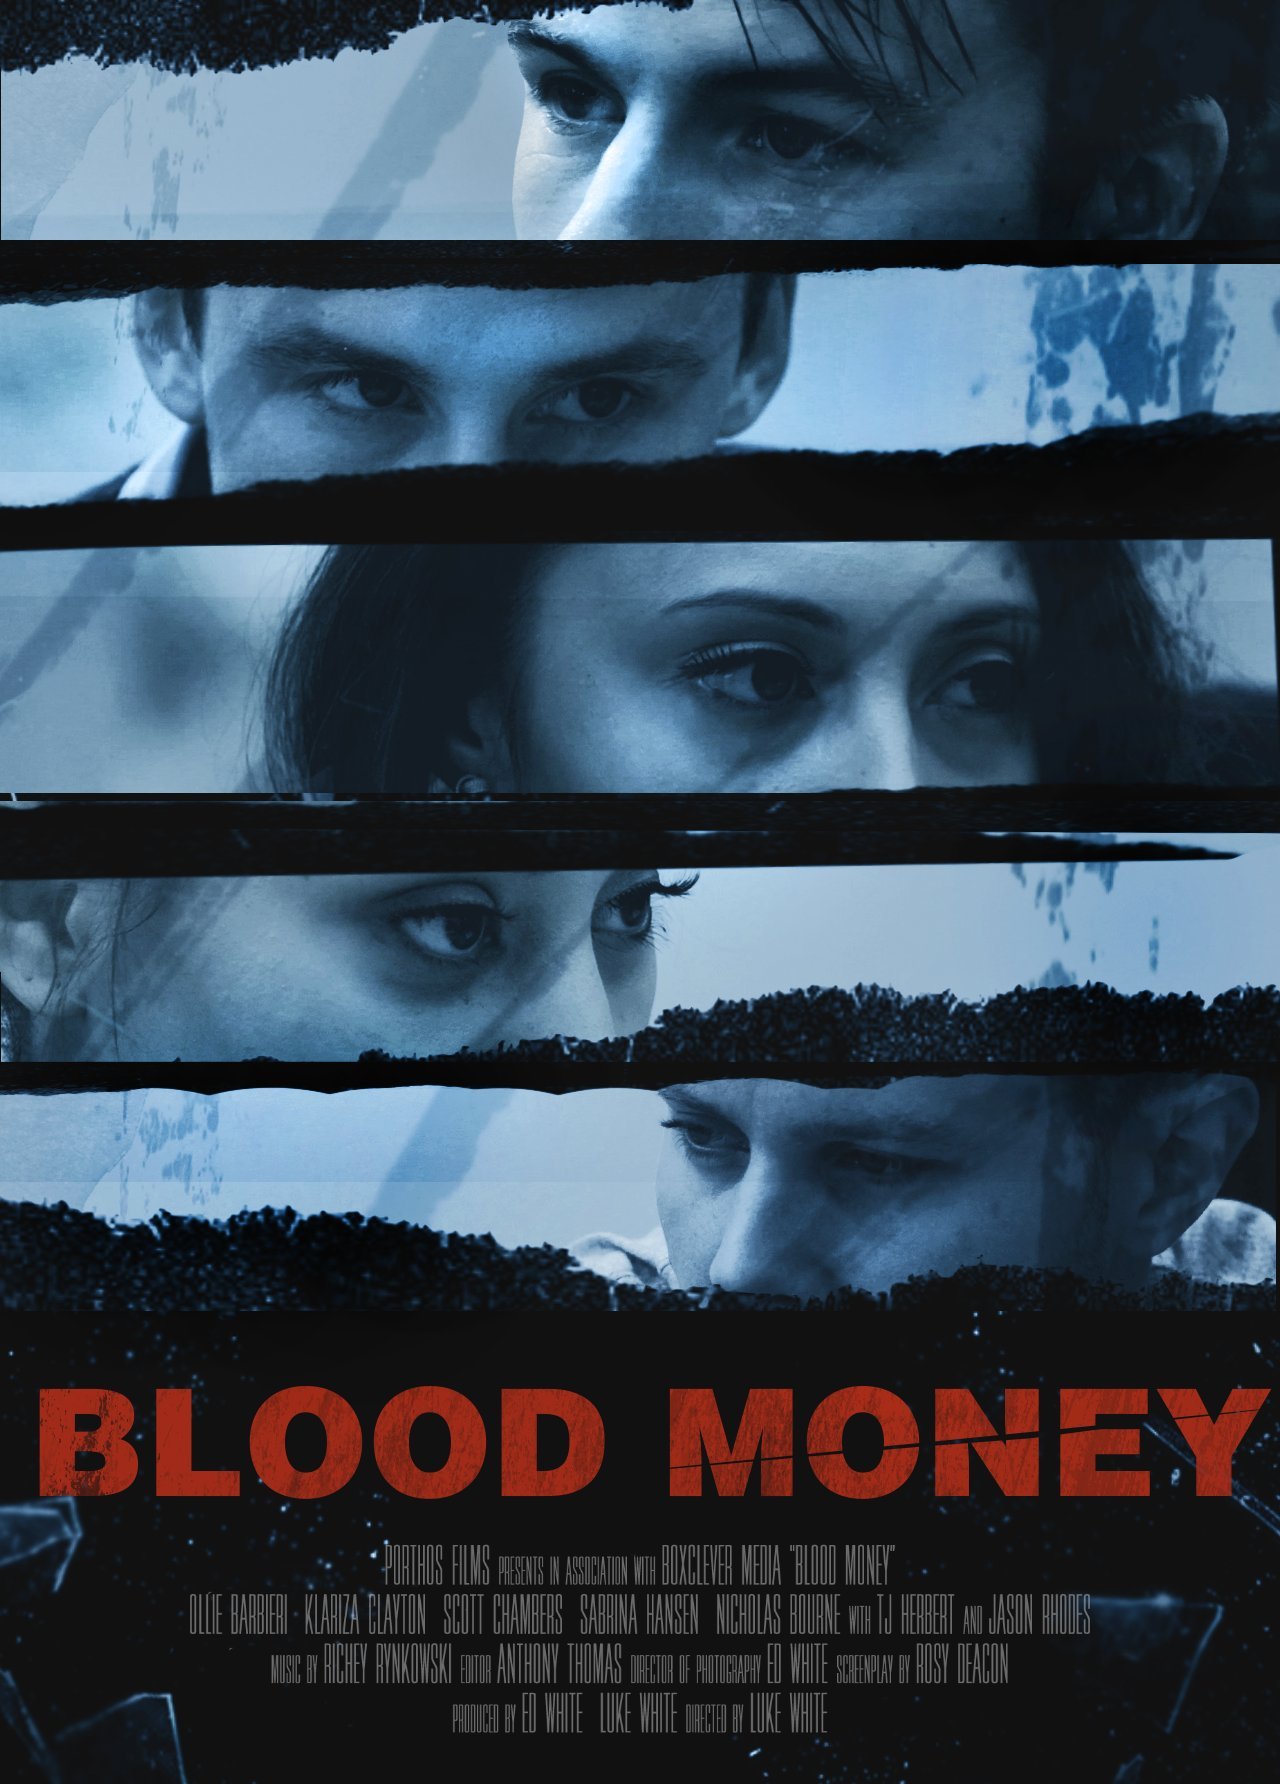 Klariza Clayton, TJ Herbert, Ollie Barbieri, Luke White, Ed White, Scott Chambers, Nicholas Bourne and Sabrina Hansen in Blood Money